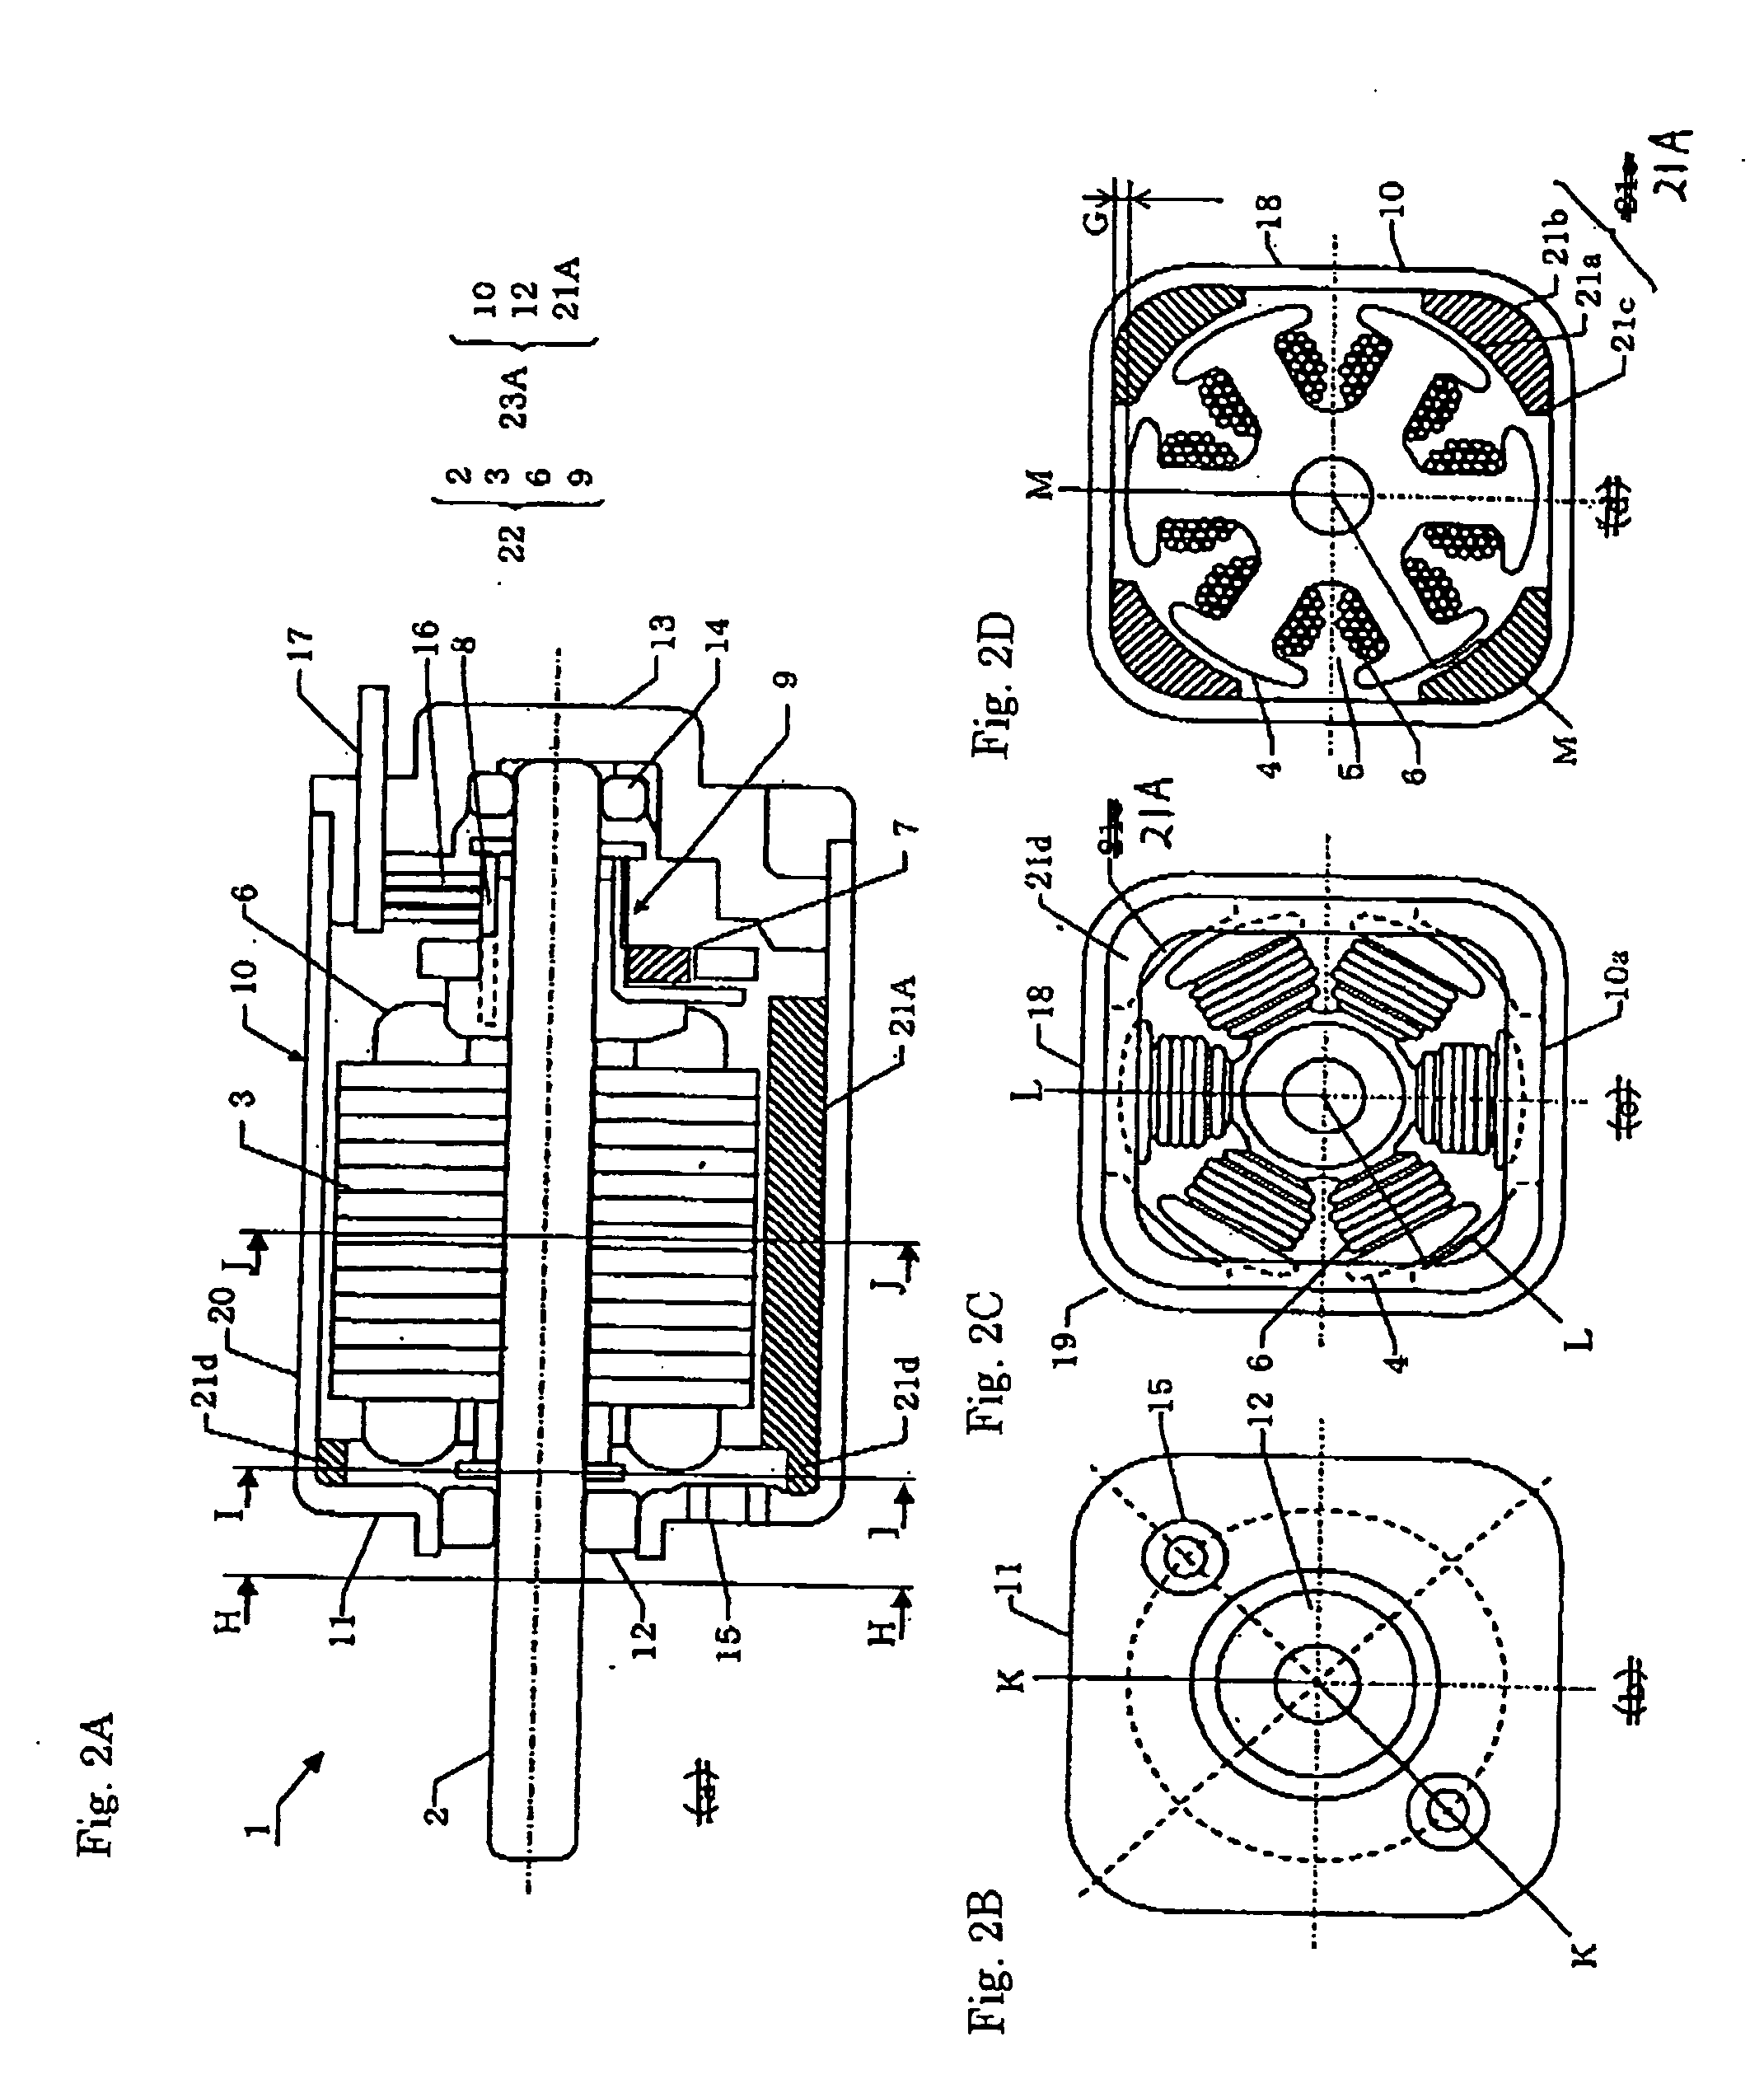 Small DC motor